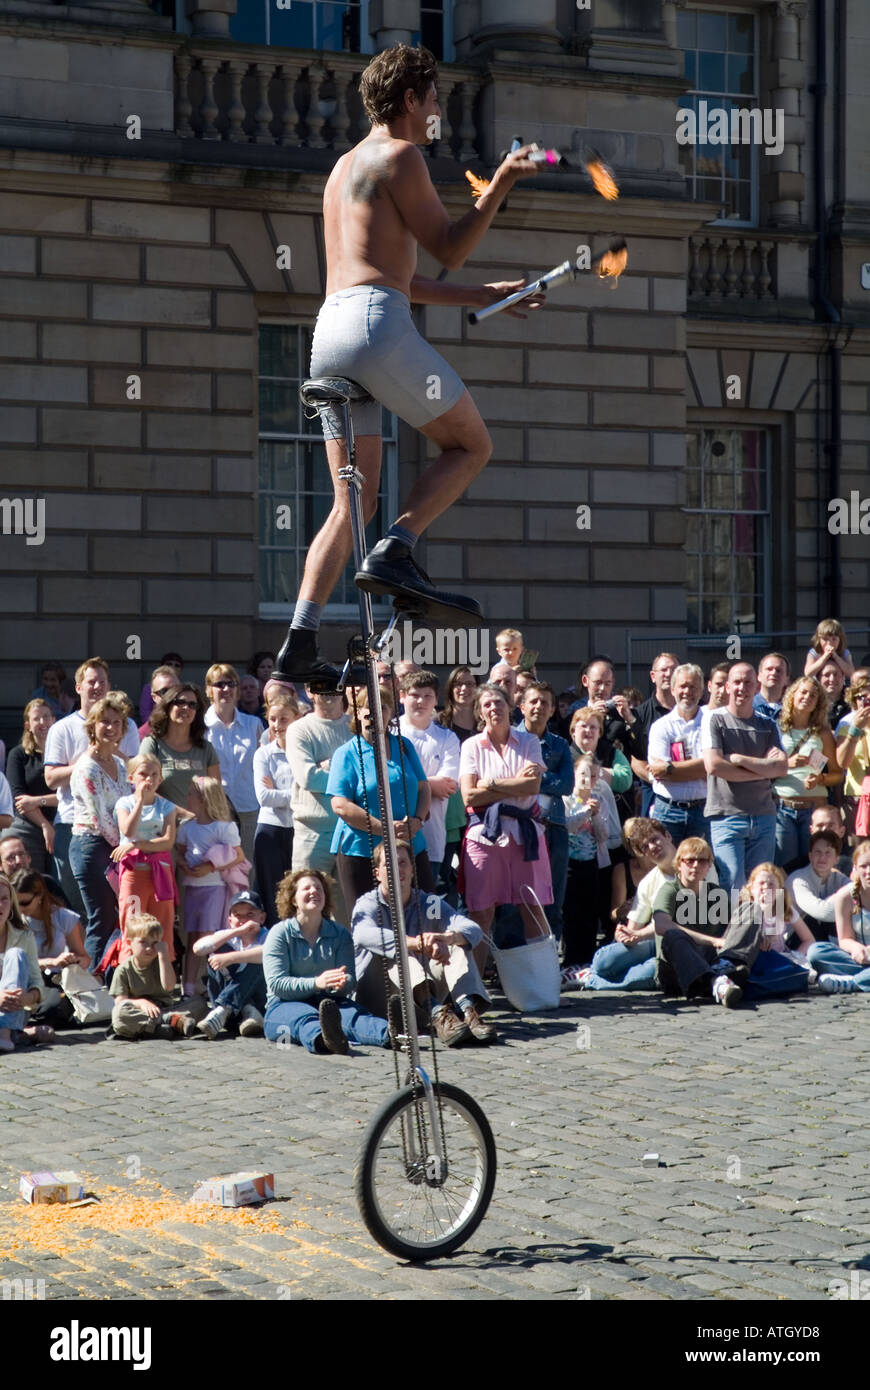 dh Edinburgh Fringe Festival ROYAL MILE EDINBURGH Zuschauerstraße Entertainer Mono Cycle Jonglieren mit Feuerkanonen Krähe Massen Leistung Stockfoto